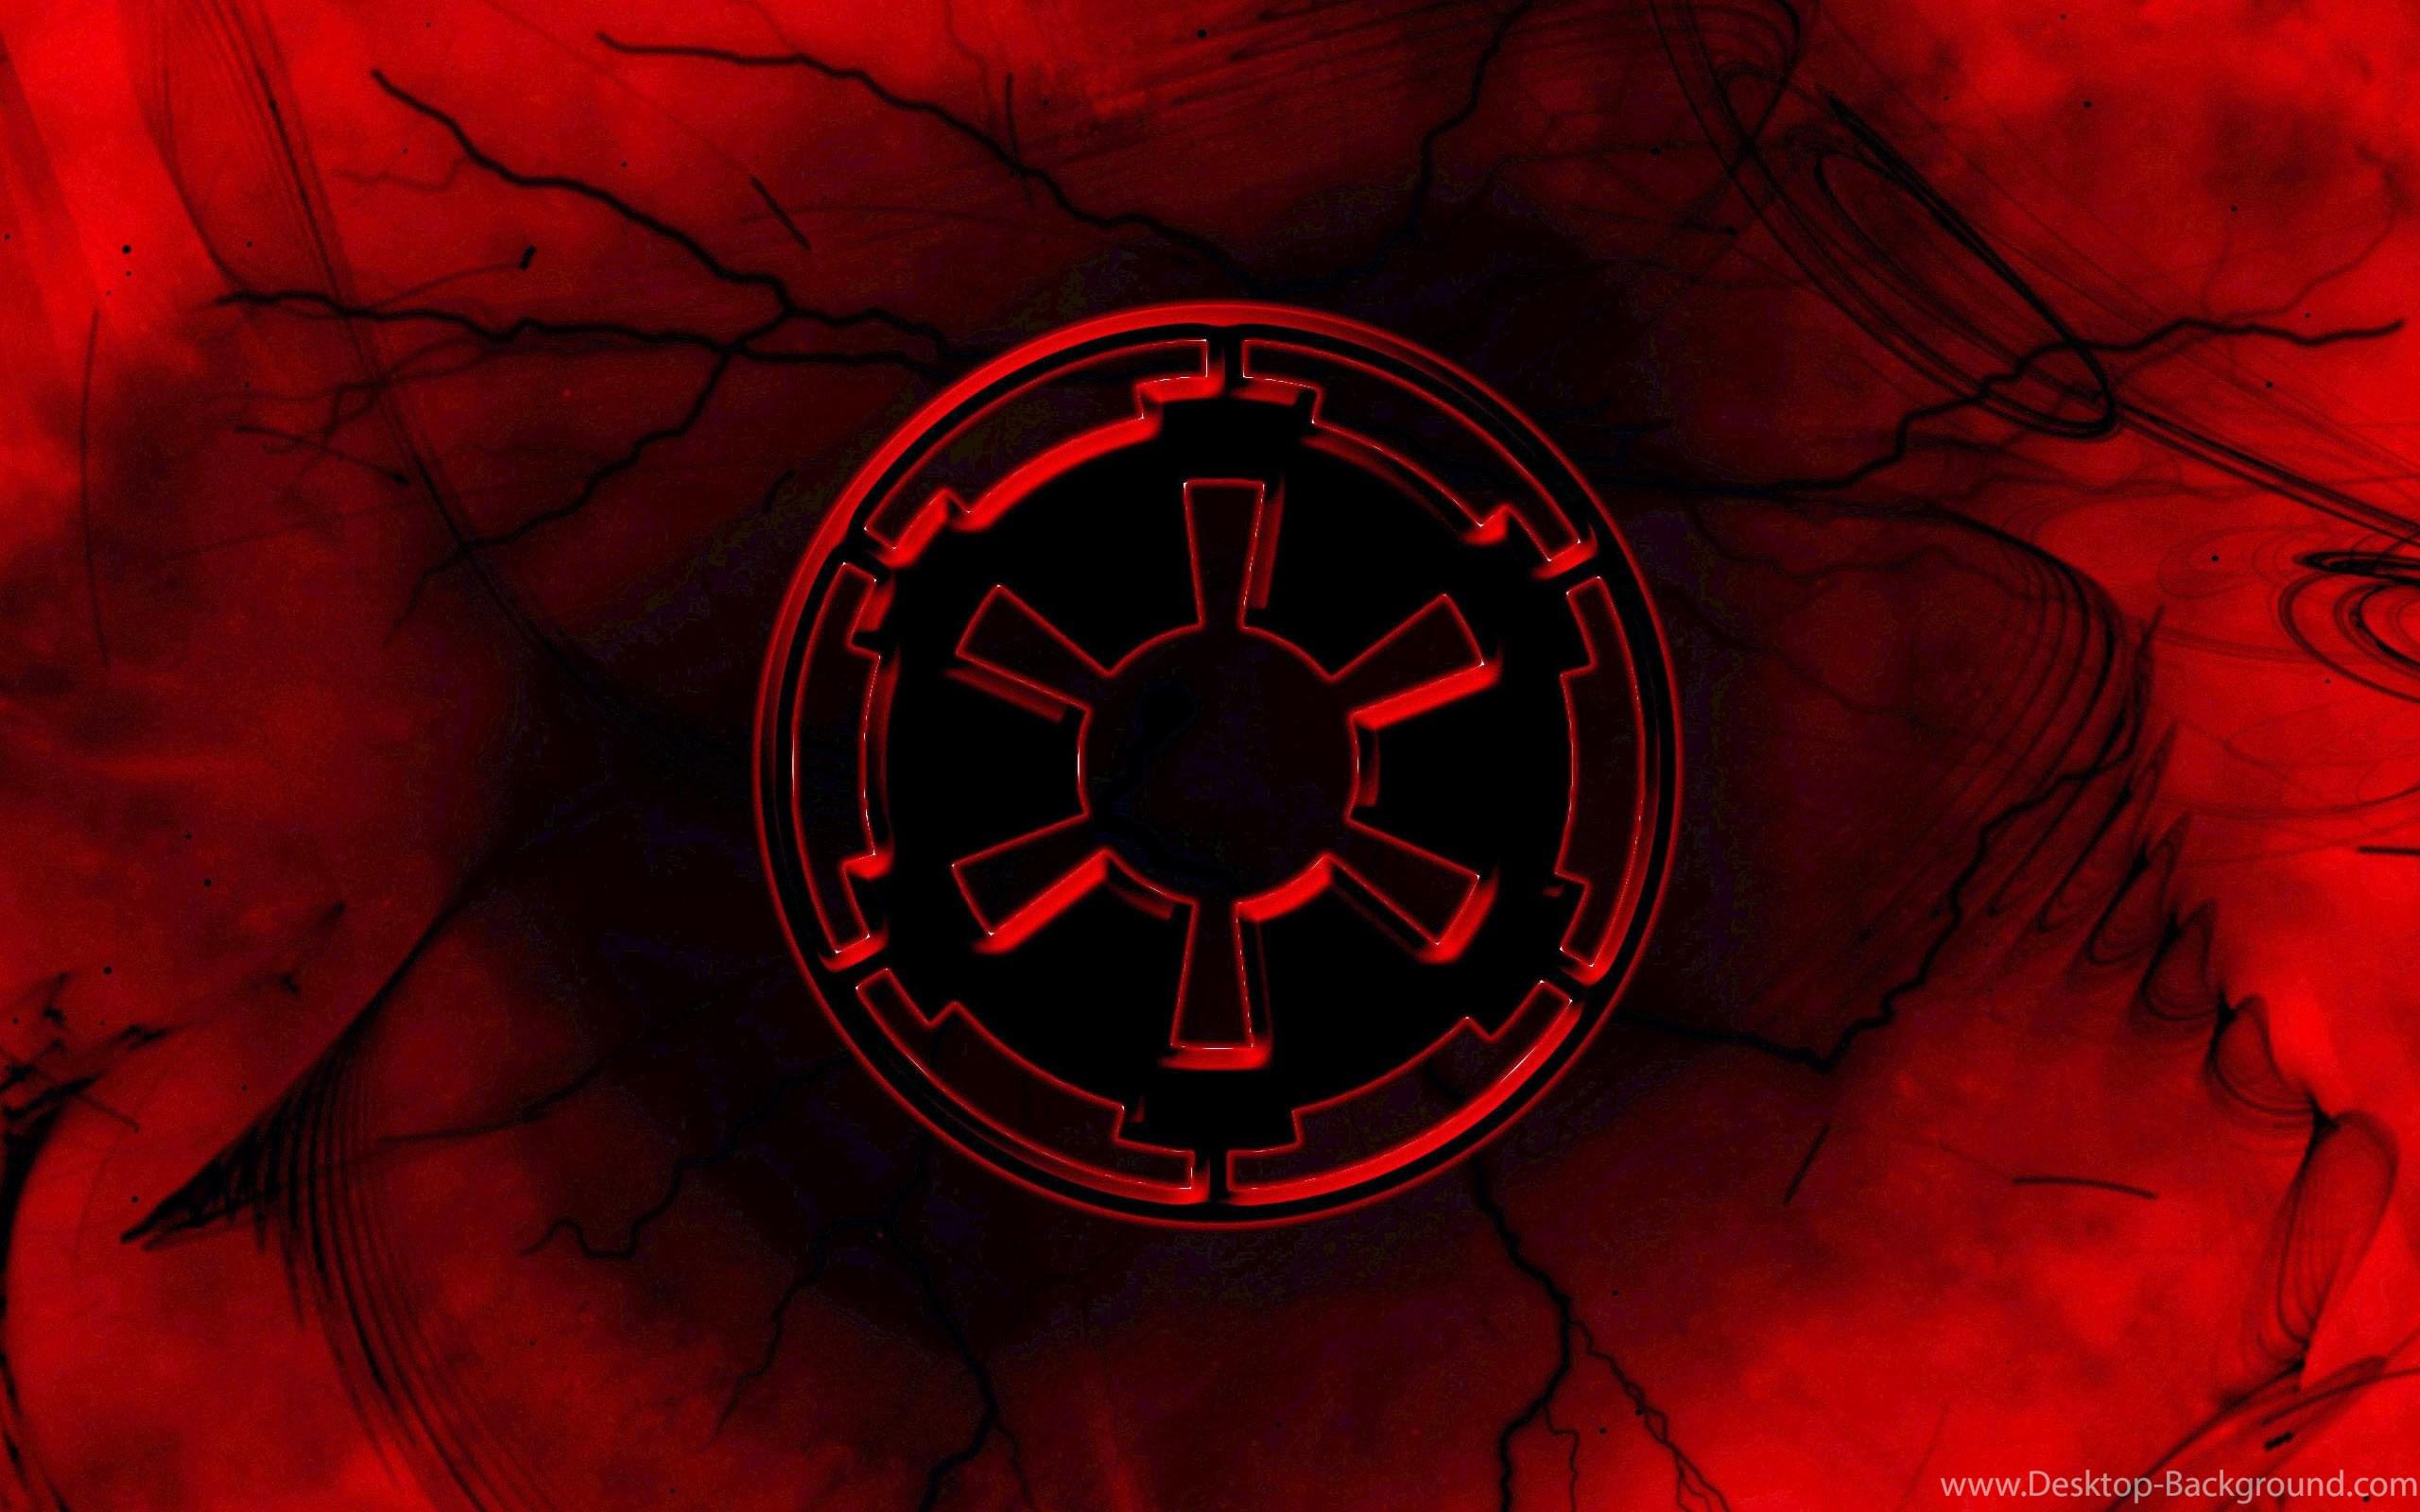 Wallpaper Star Wars Imperial Logo Sith 2560x1600 Desktop Background